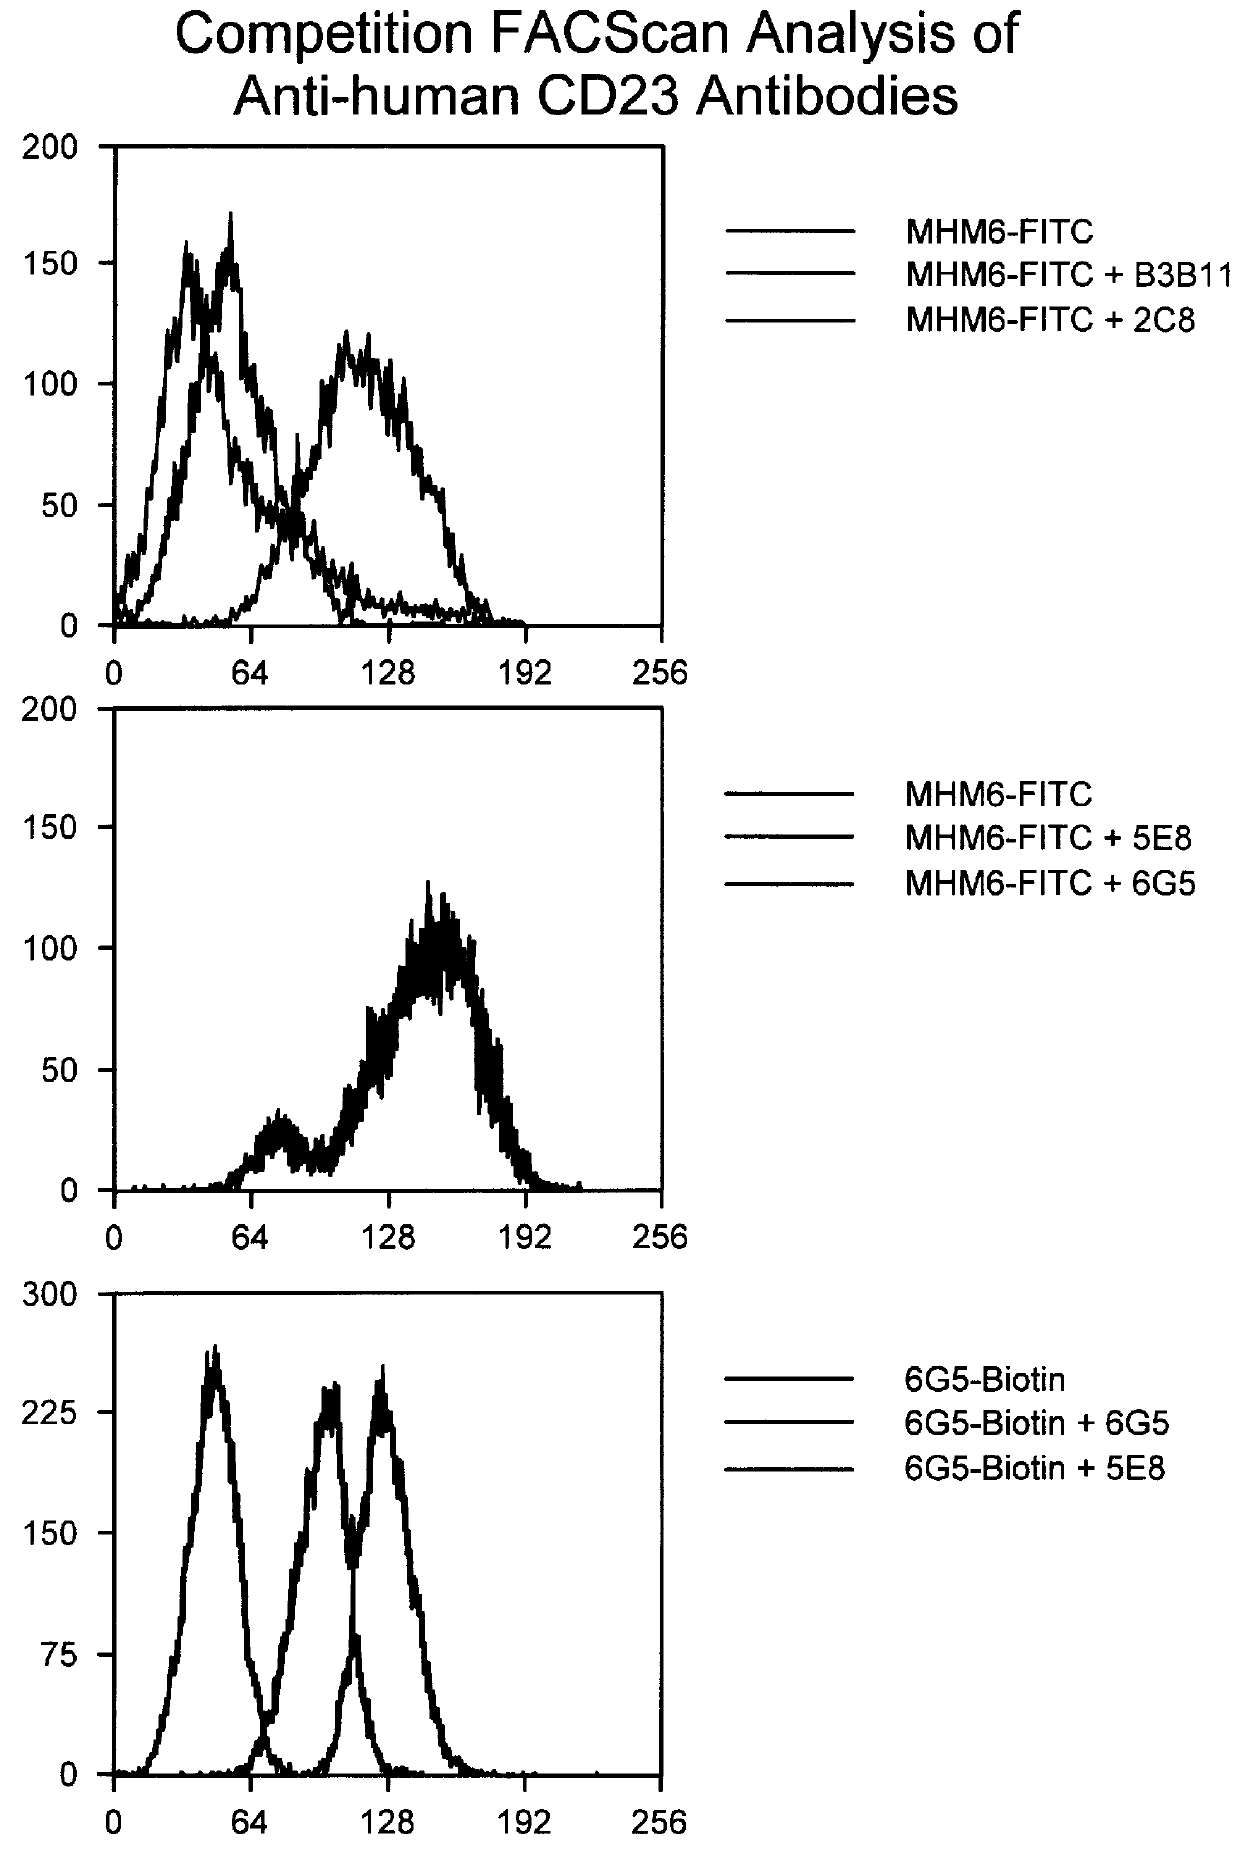 Gamma-1 anti-human CD23 monoclonal antibodies